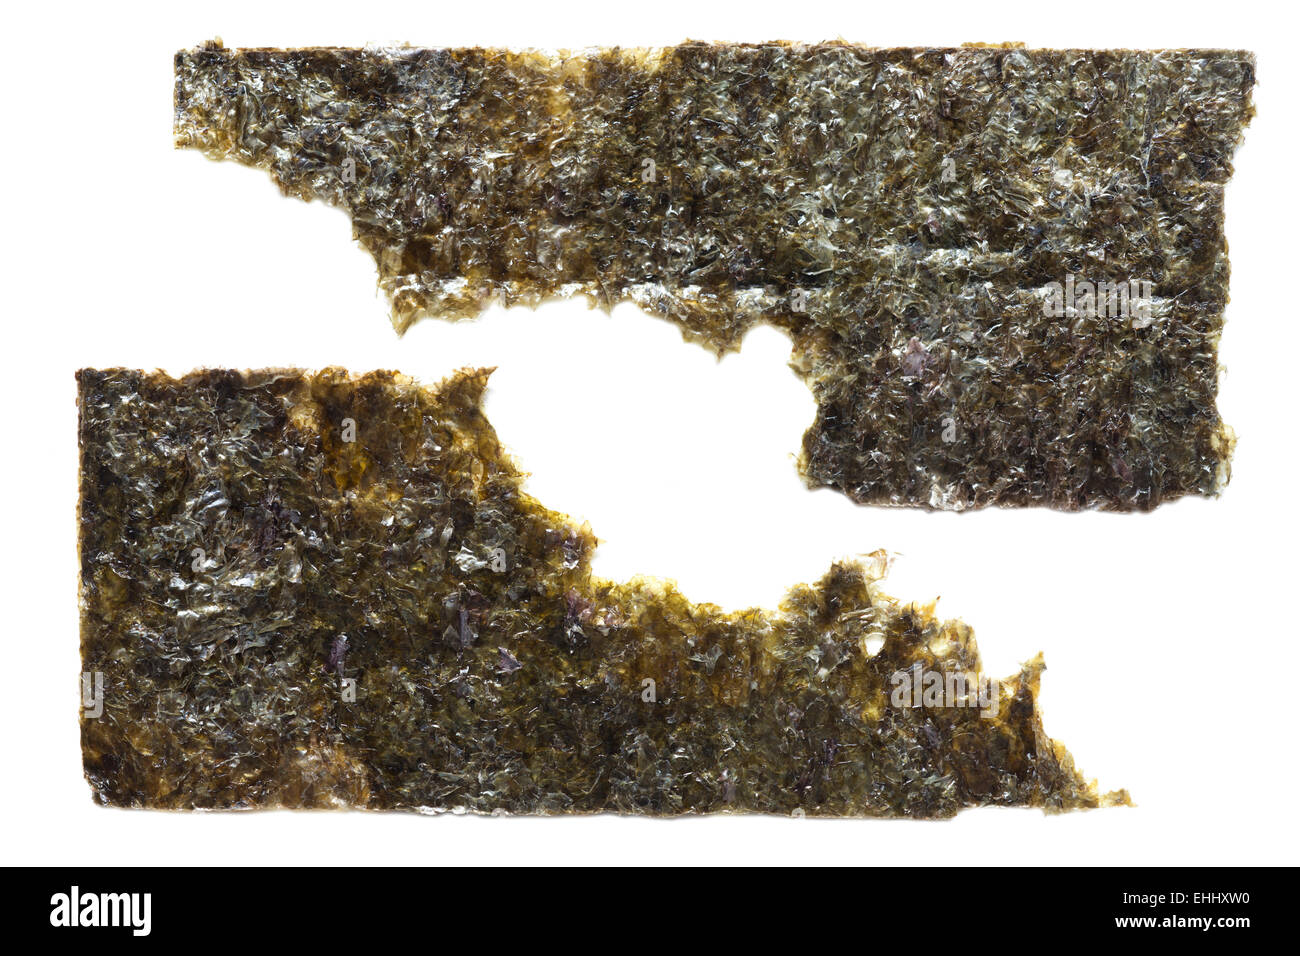 zwei trockene Algen Stücke isoliert auf weiss Stockfoto